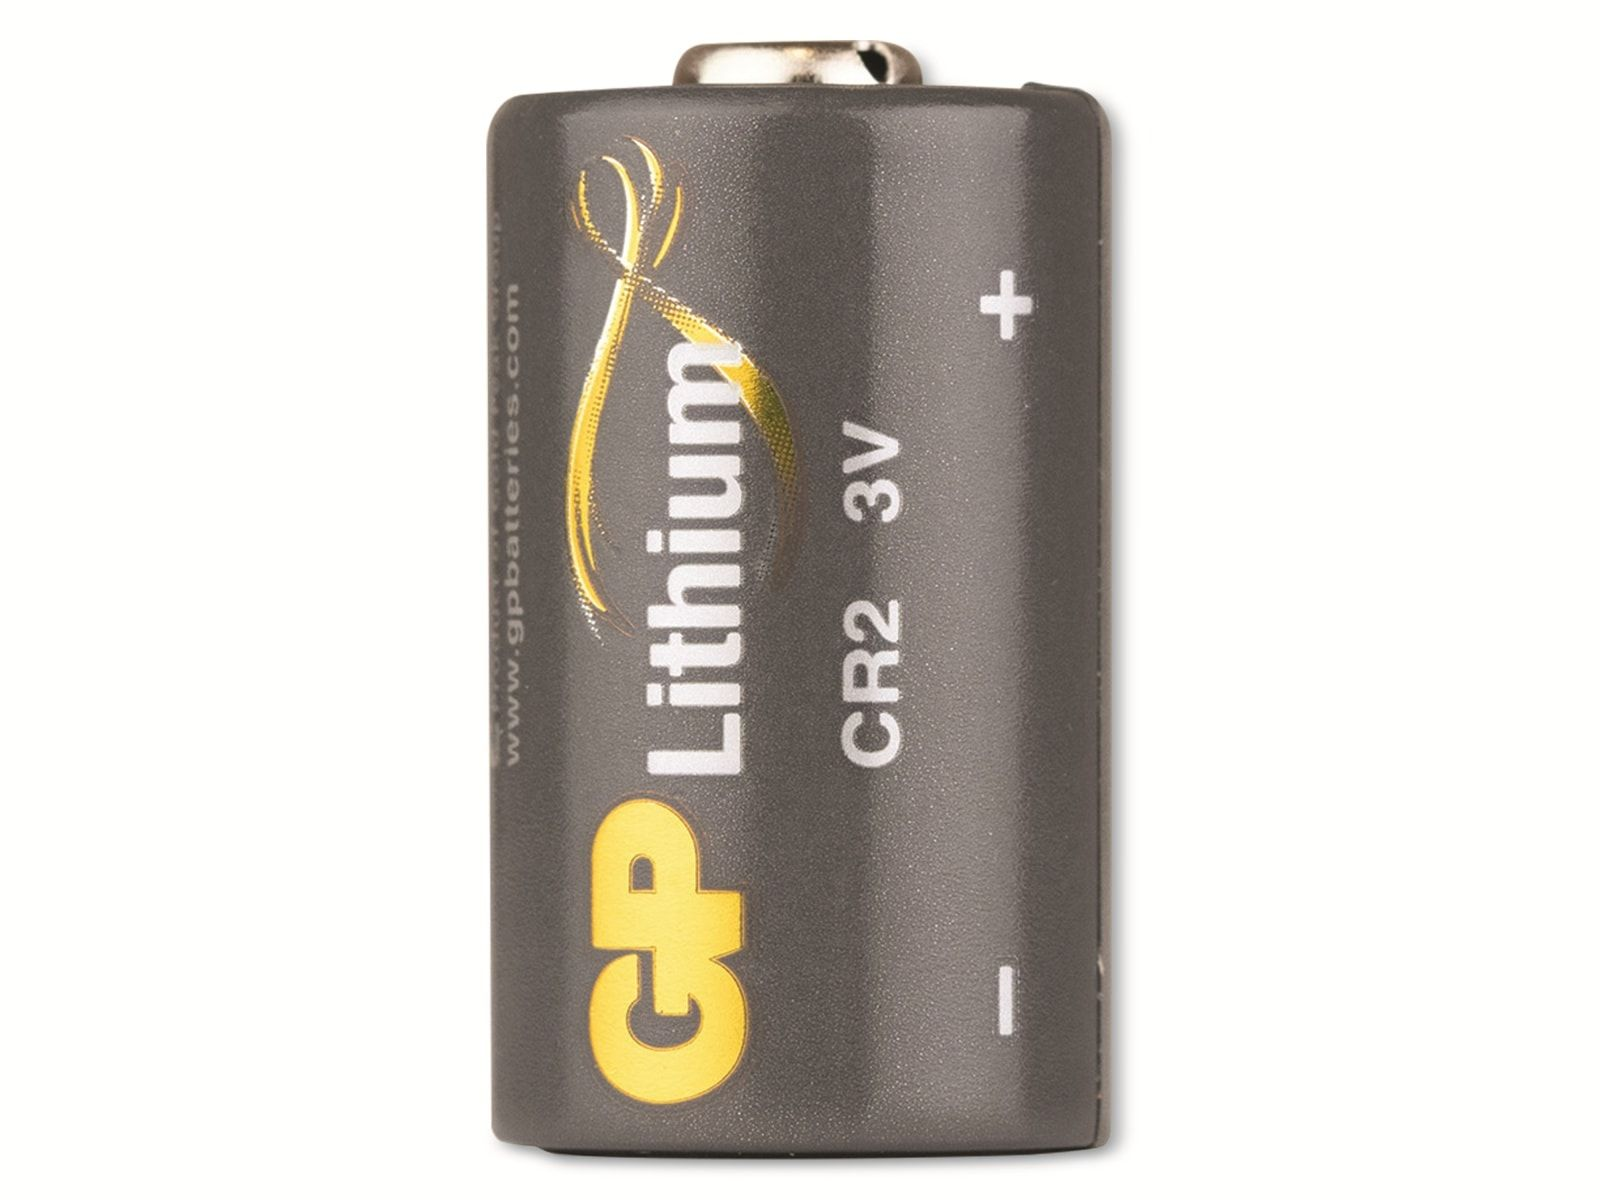 CR2, GP 10 3V, Lithium Lithium-Batterie Batterie Stück